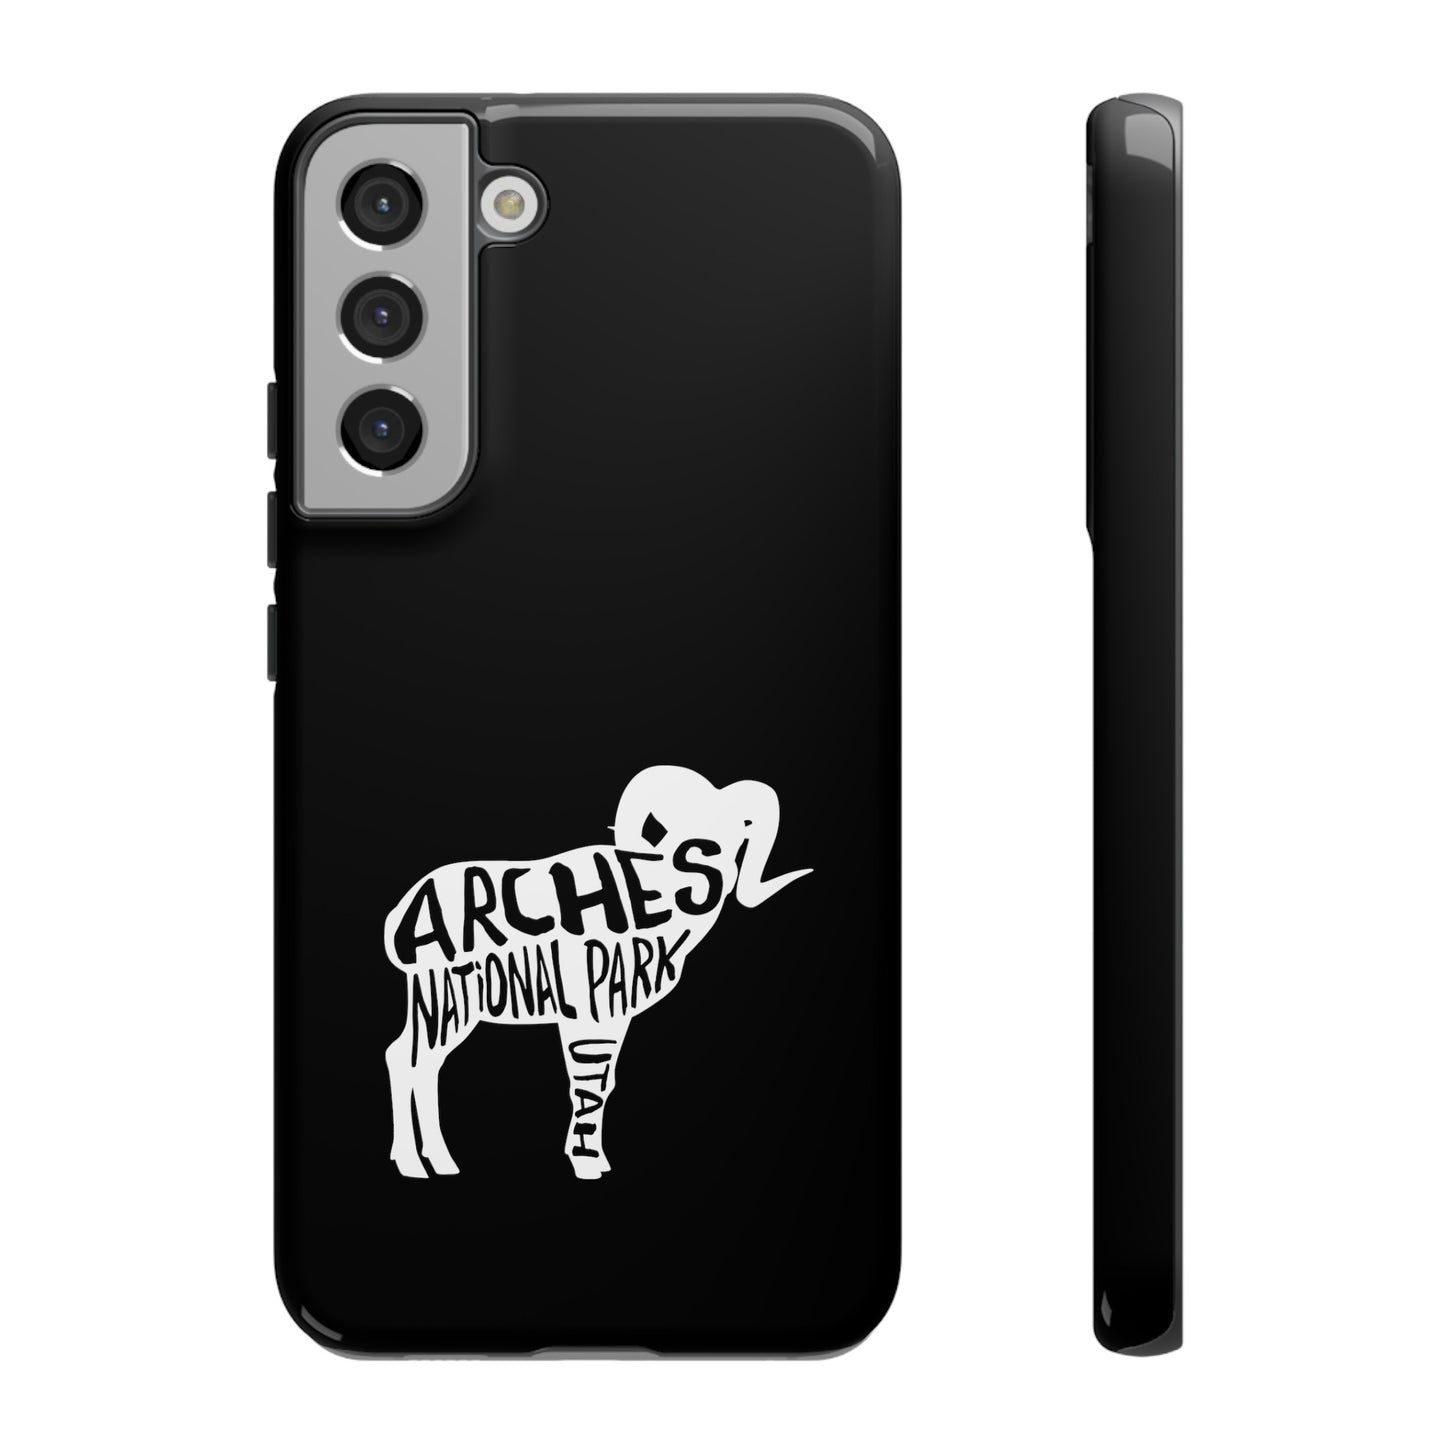 Arches National Park Phone Case - Bighorn Sheep Design